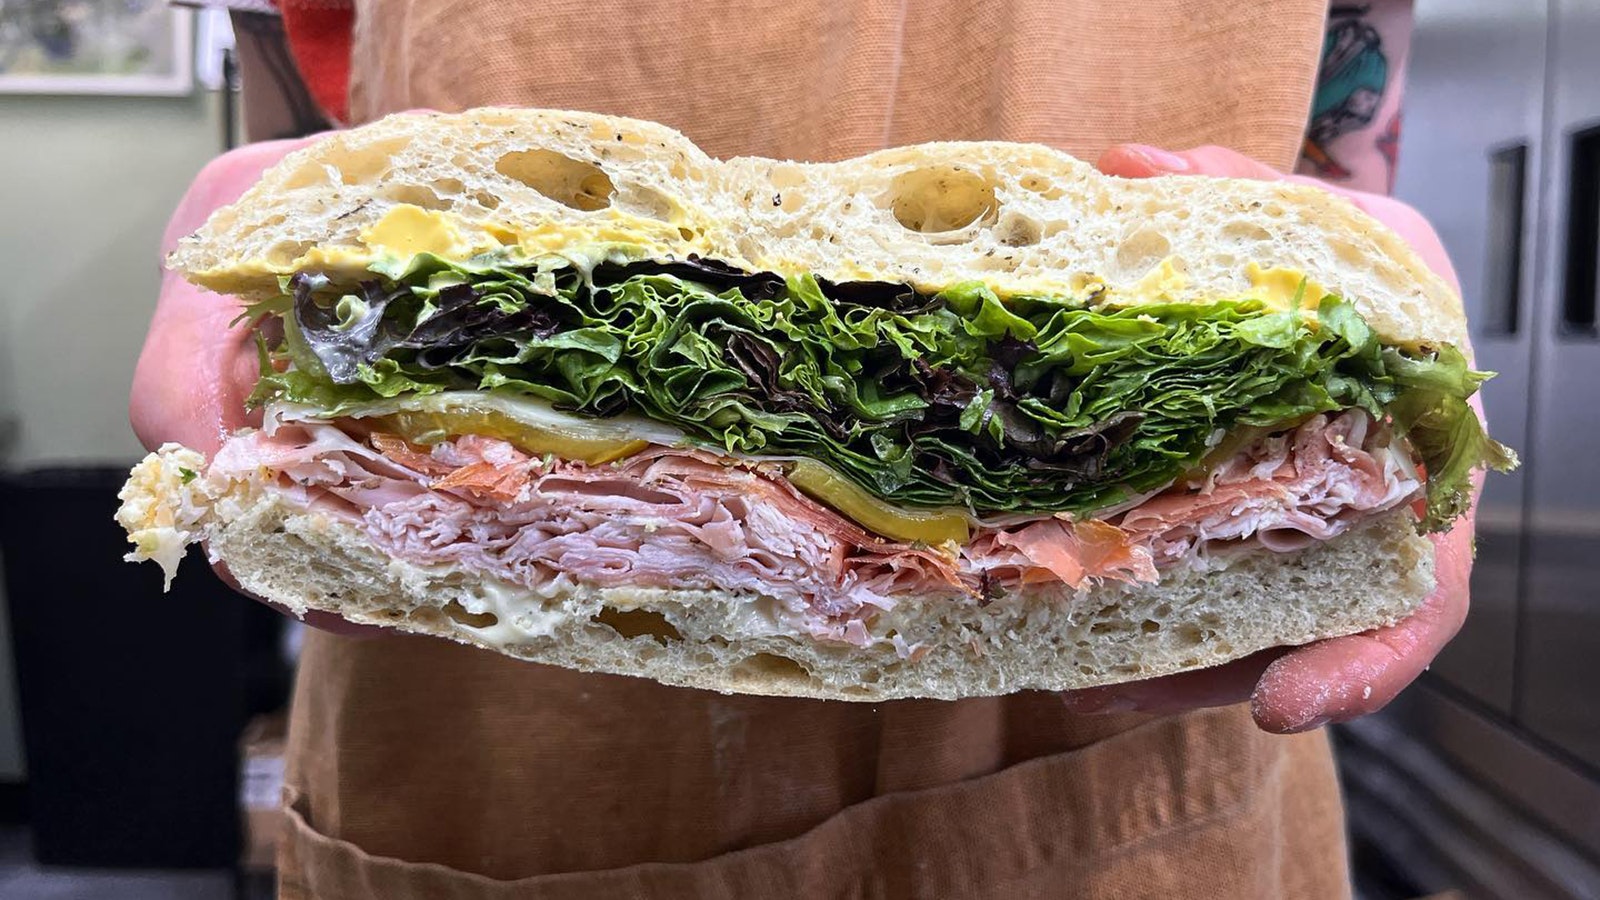 The Jamon sandwich with Jamon serrano ham, porchetta, greybull valley greens, asiago pressato, mustard and aioli.